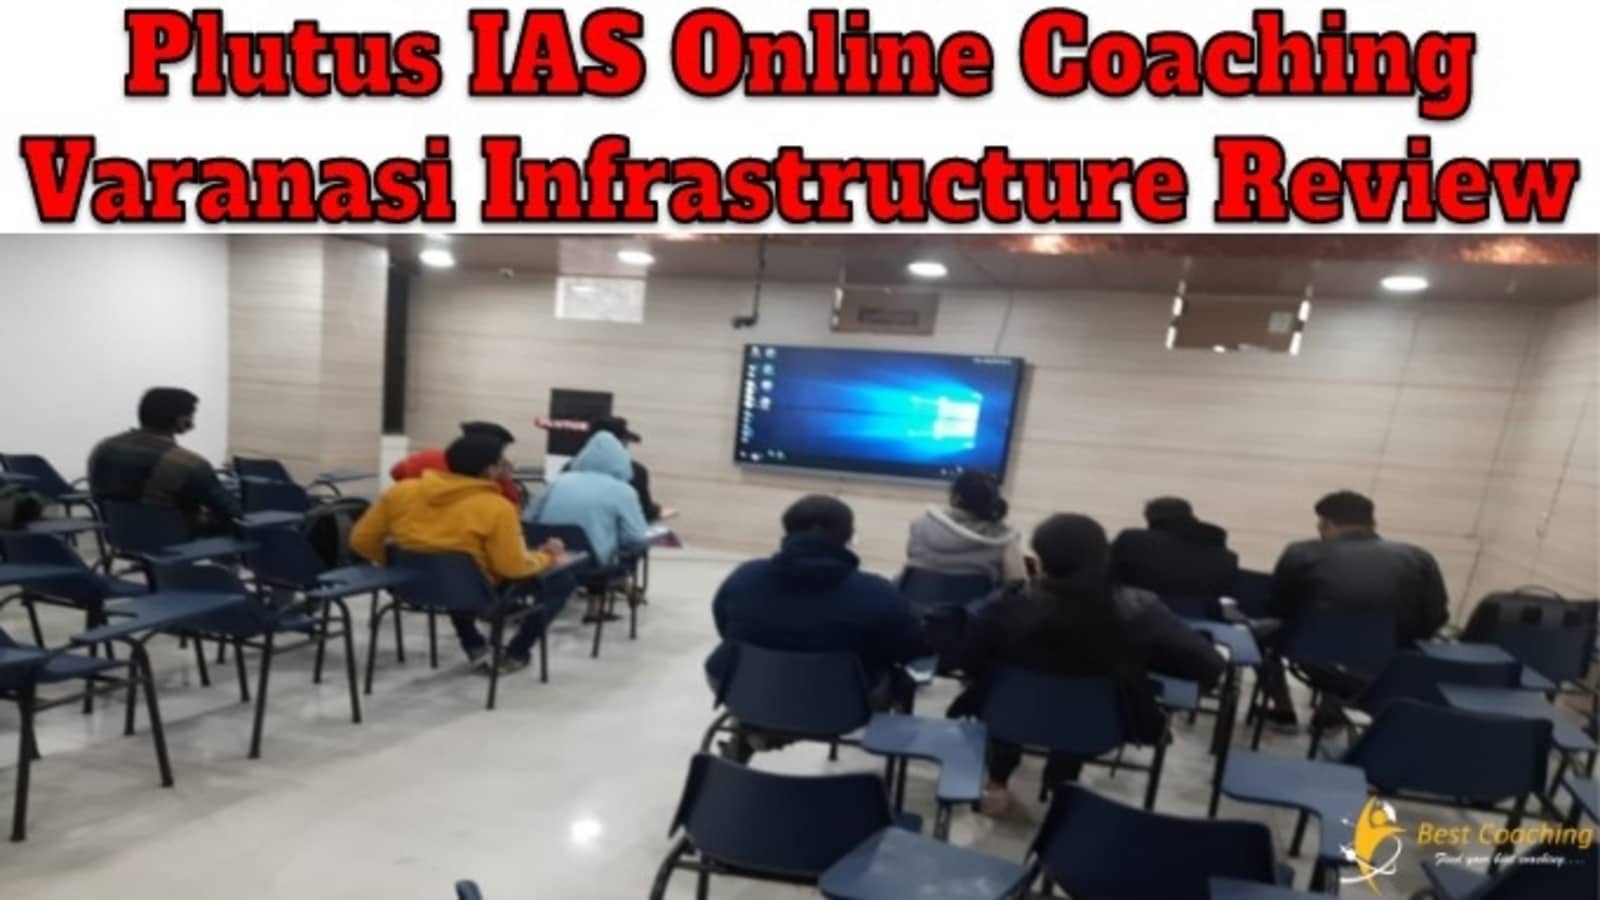 Plutus IAS Online Coaching Varanasi Infrastructure Review